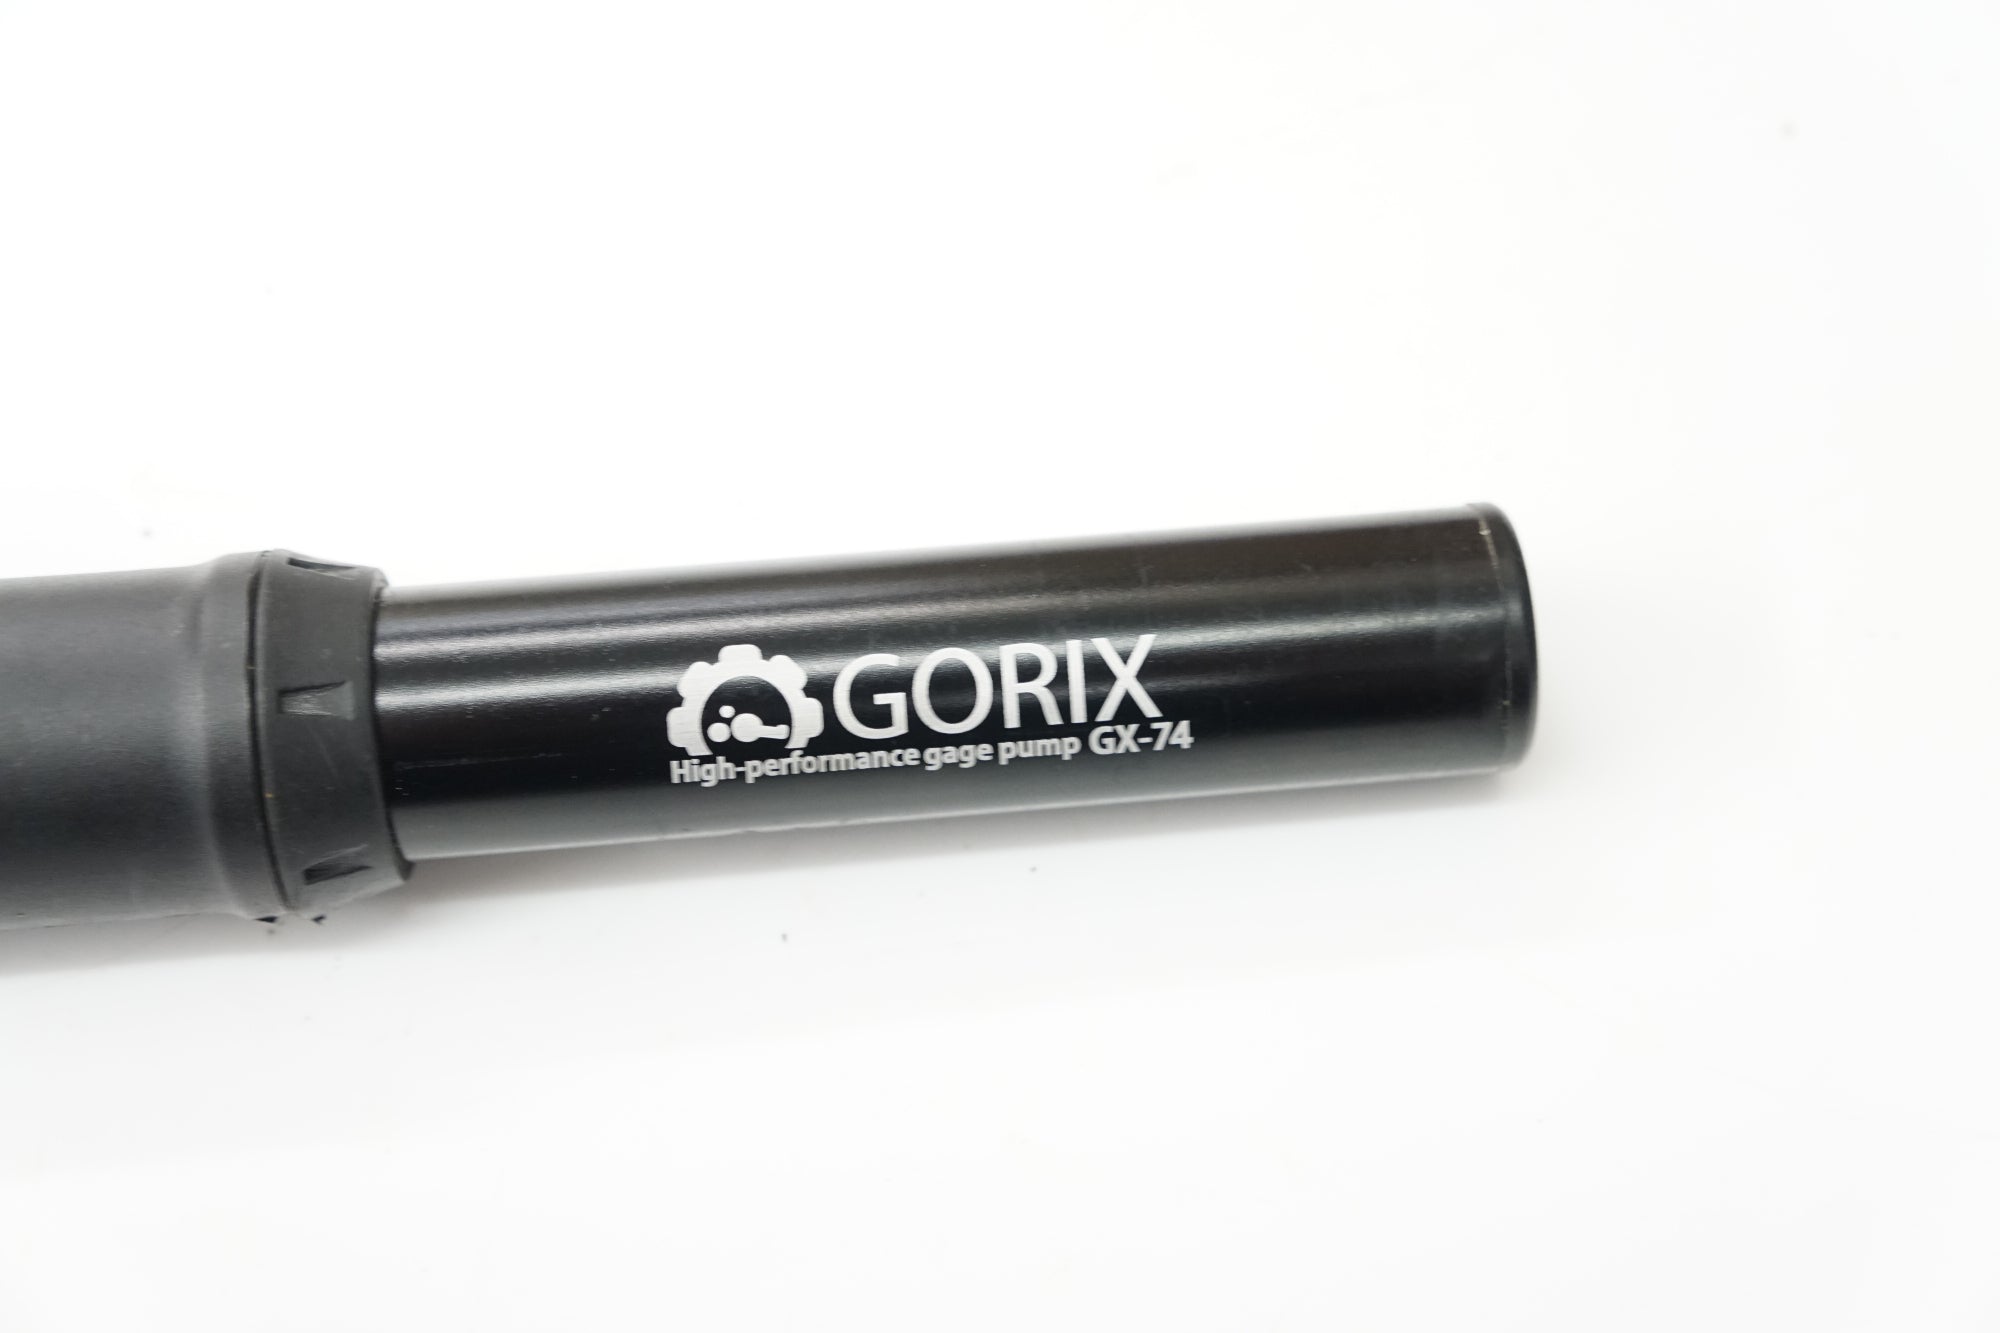 GORIX 「ゴリックス」 GX-74 携帯ポンプ / バイチャリ浦和ベース